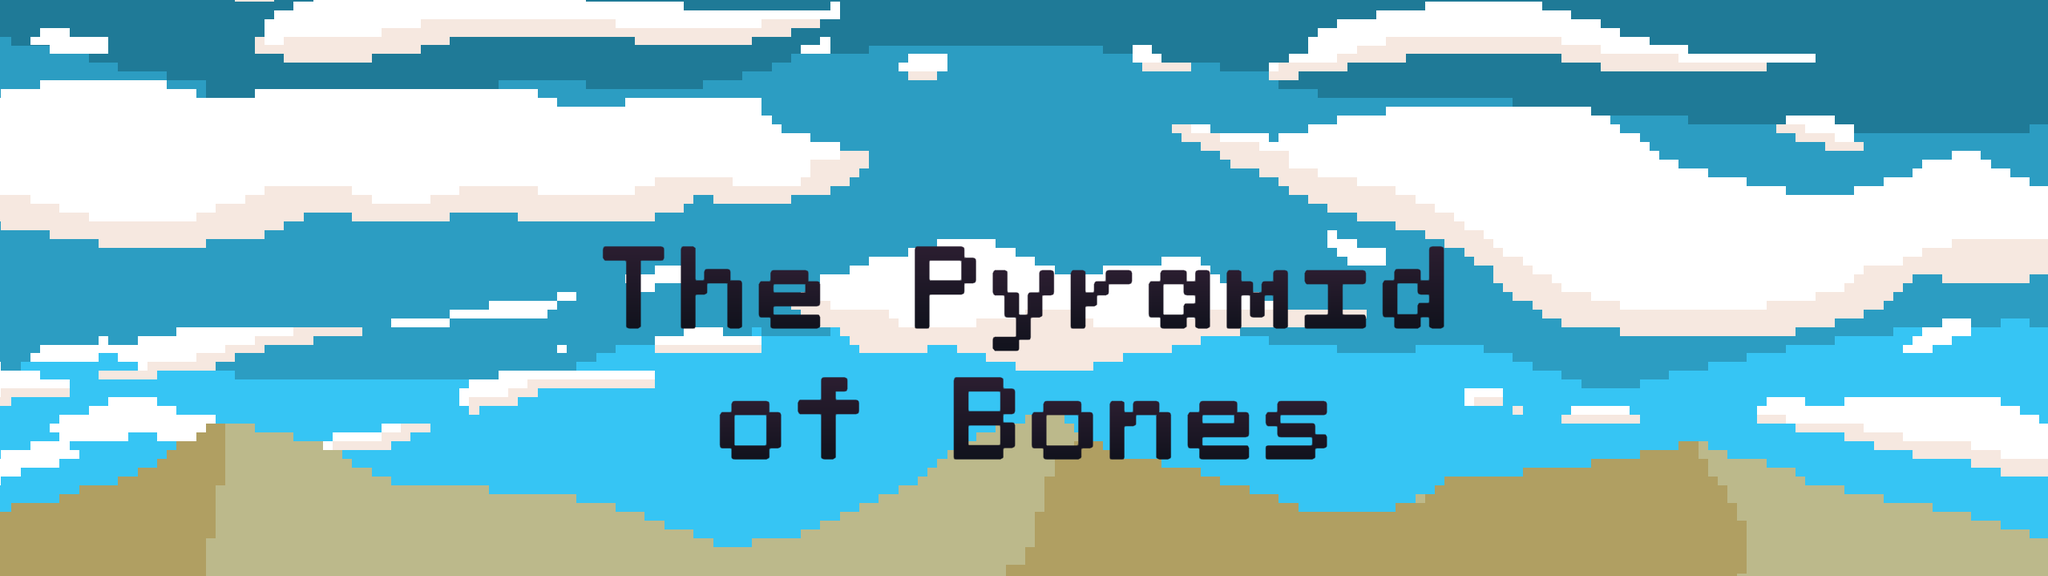 The Pyramid Of Bones